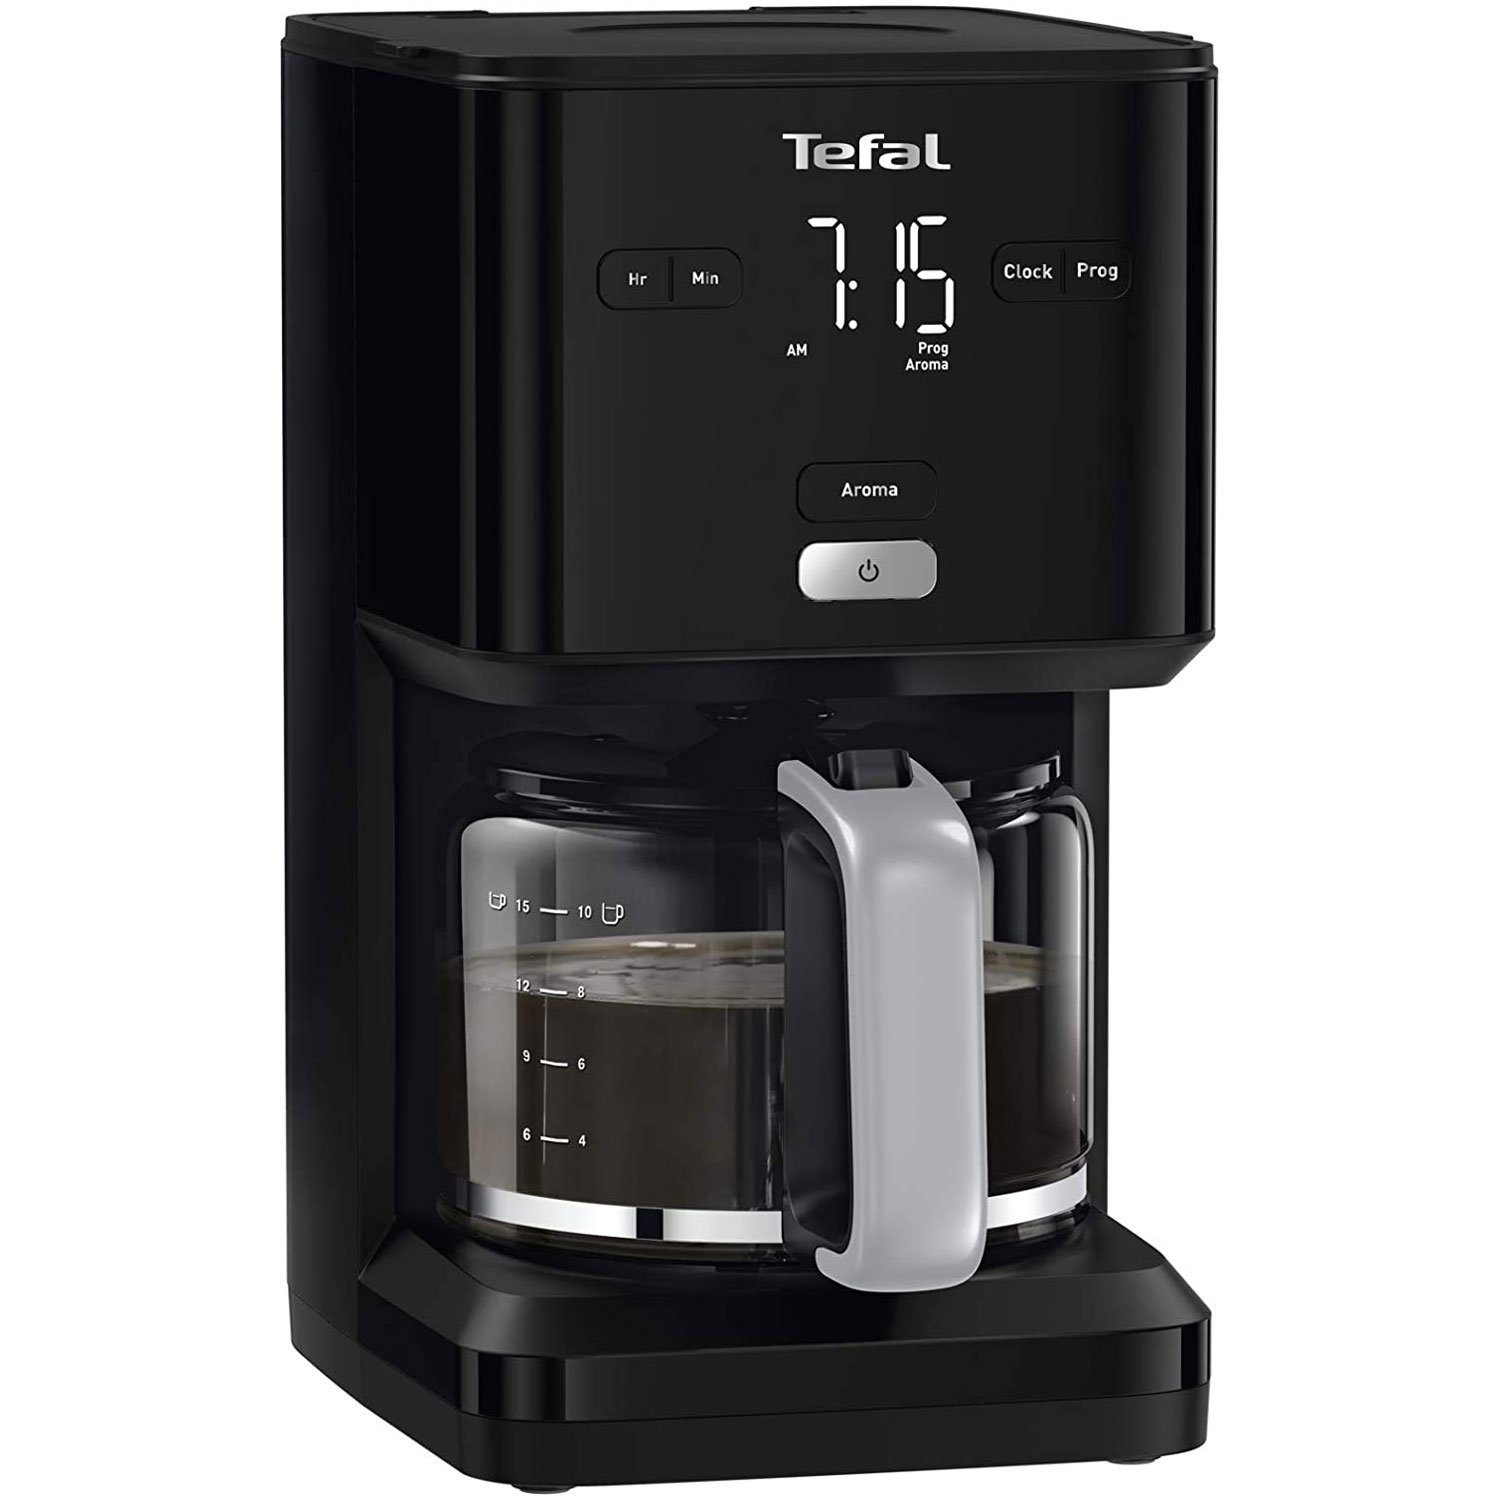 Kaffeekanne, Aroma-Funktion, Tefal 1.25l CM600810, Warmhalte-Funktion Digitales LCD-Display, Filterkaffeemaschine 24h-Timer,